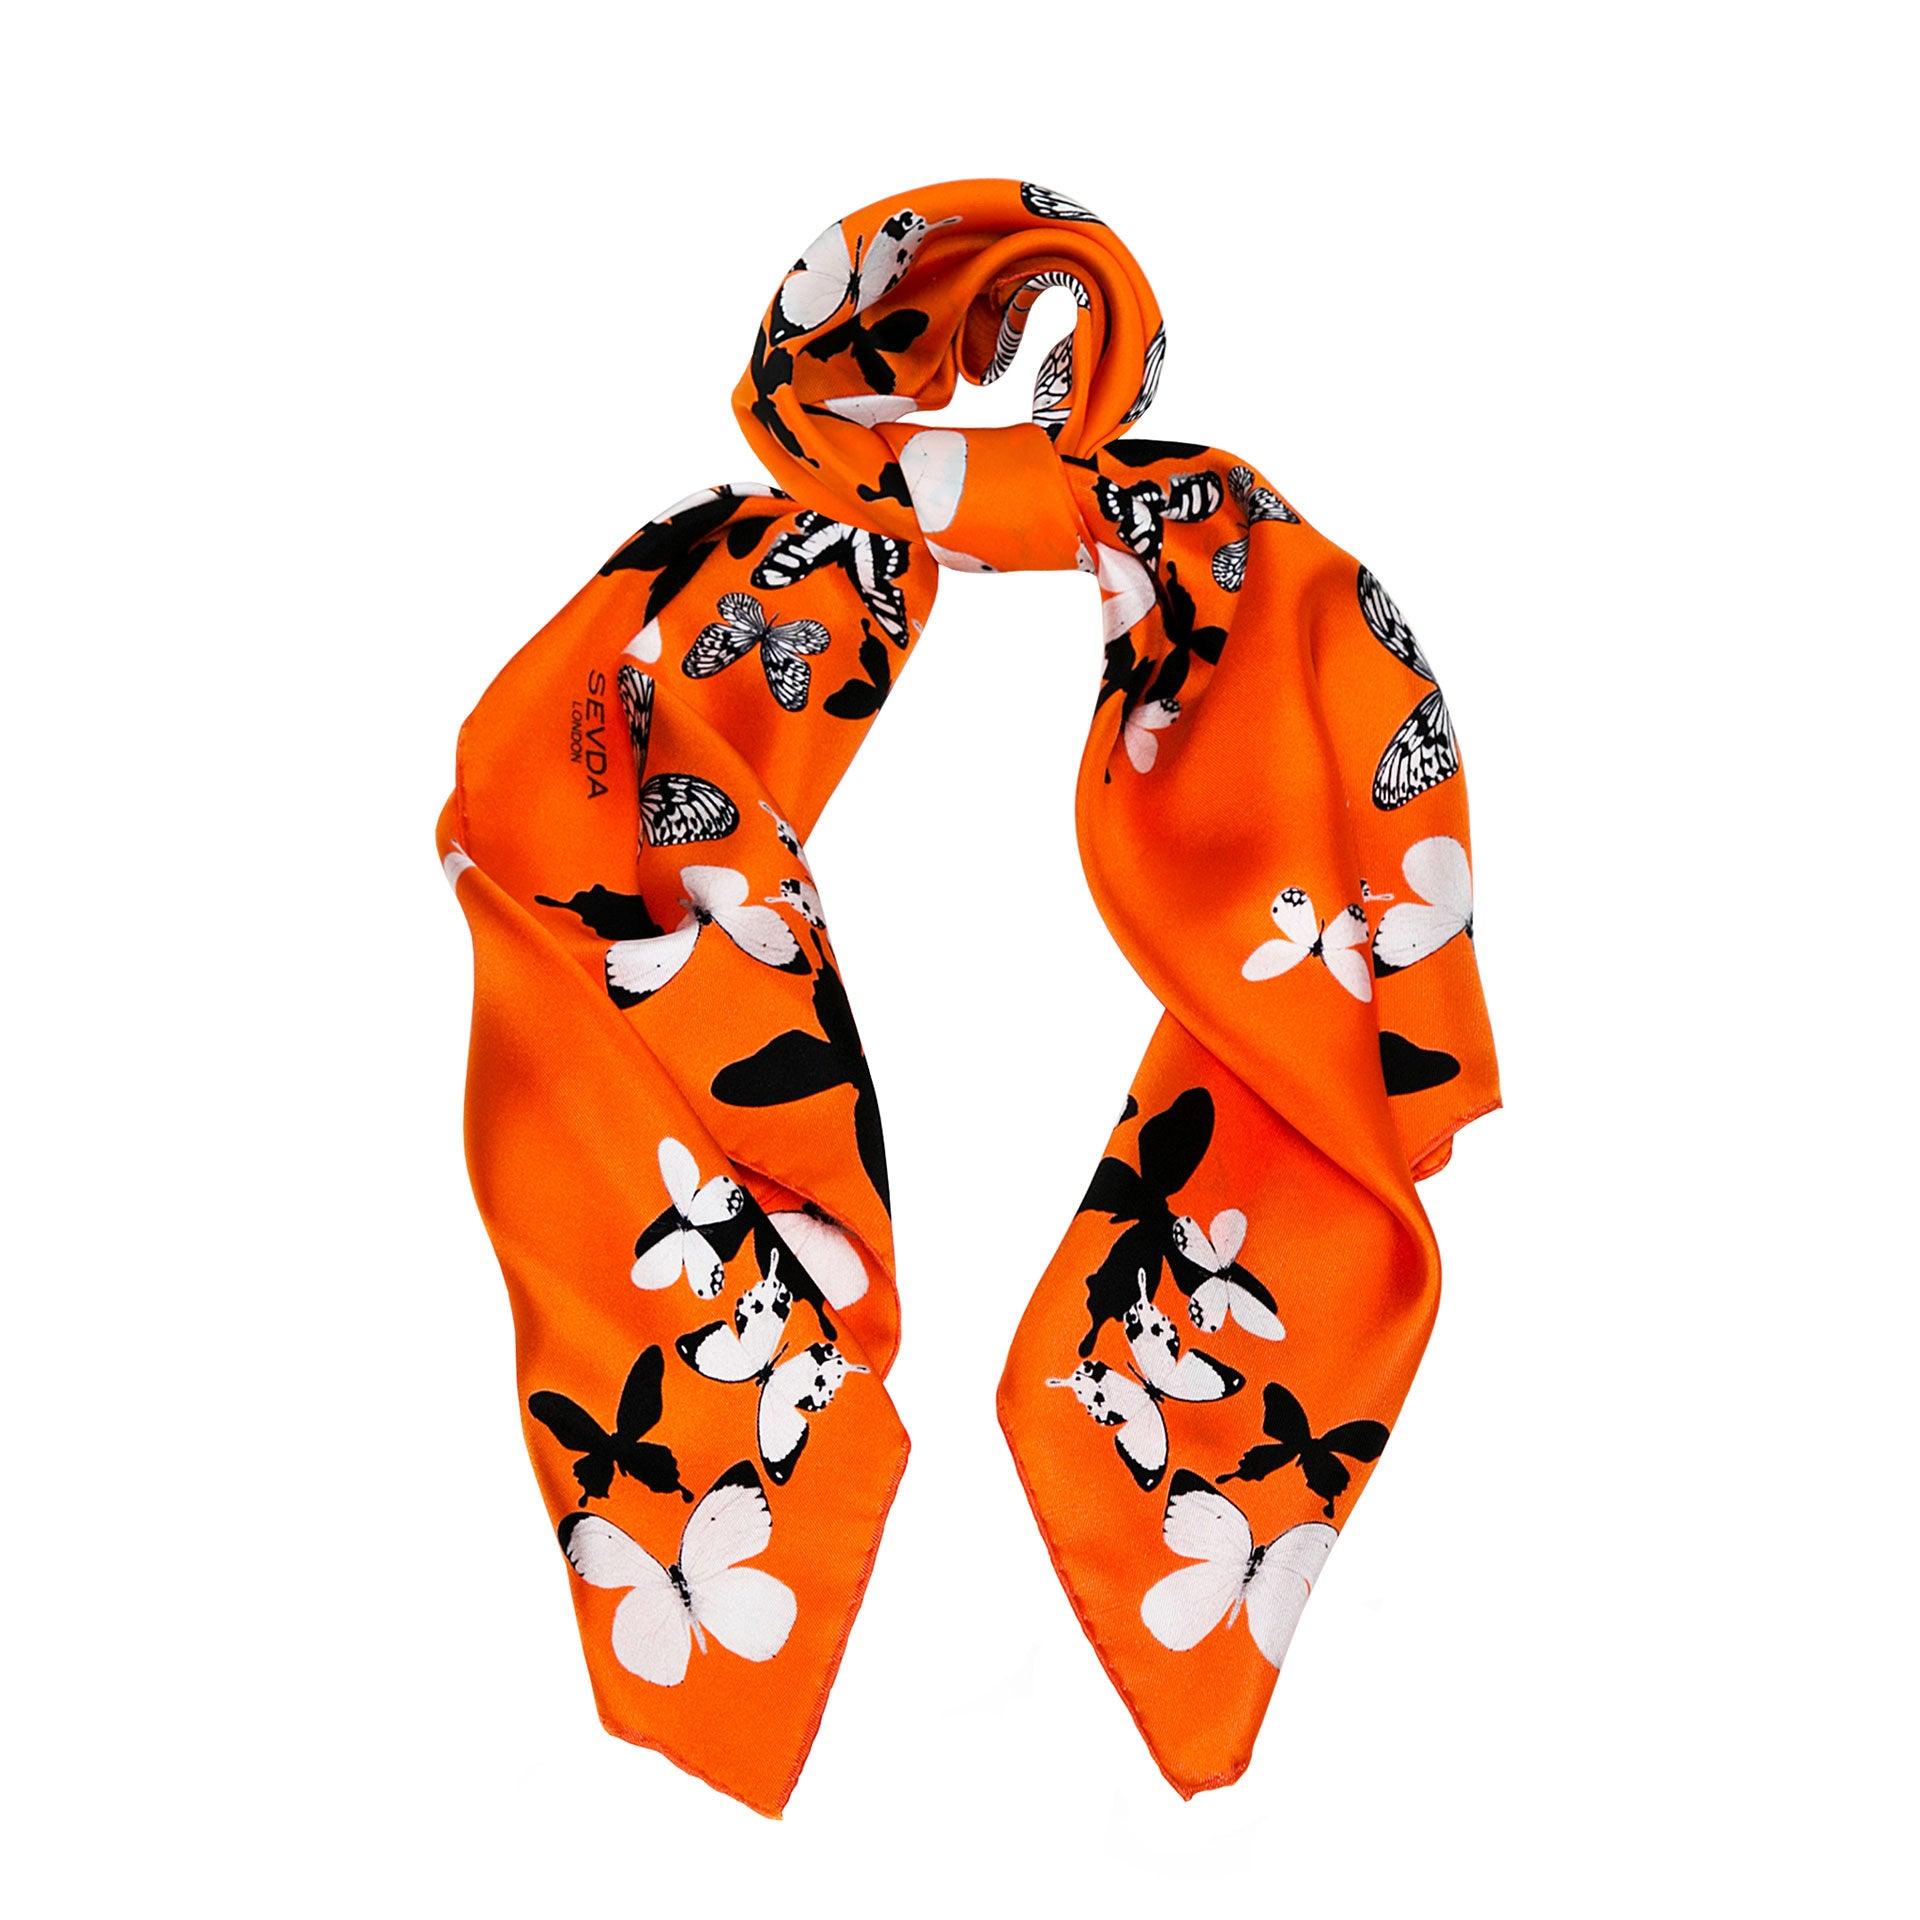 Orange Butterflies Silk Scarf - A blend of London's design and Italian craftsmanship, a luxurious gift choice.